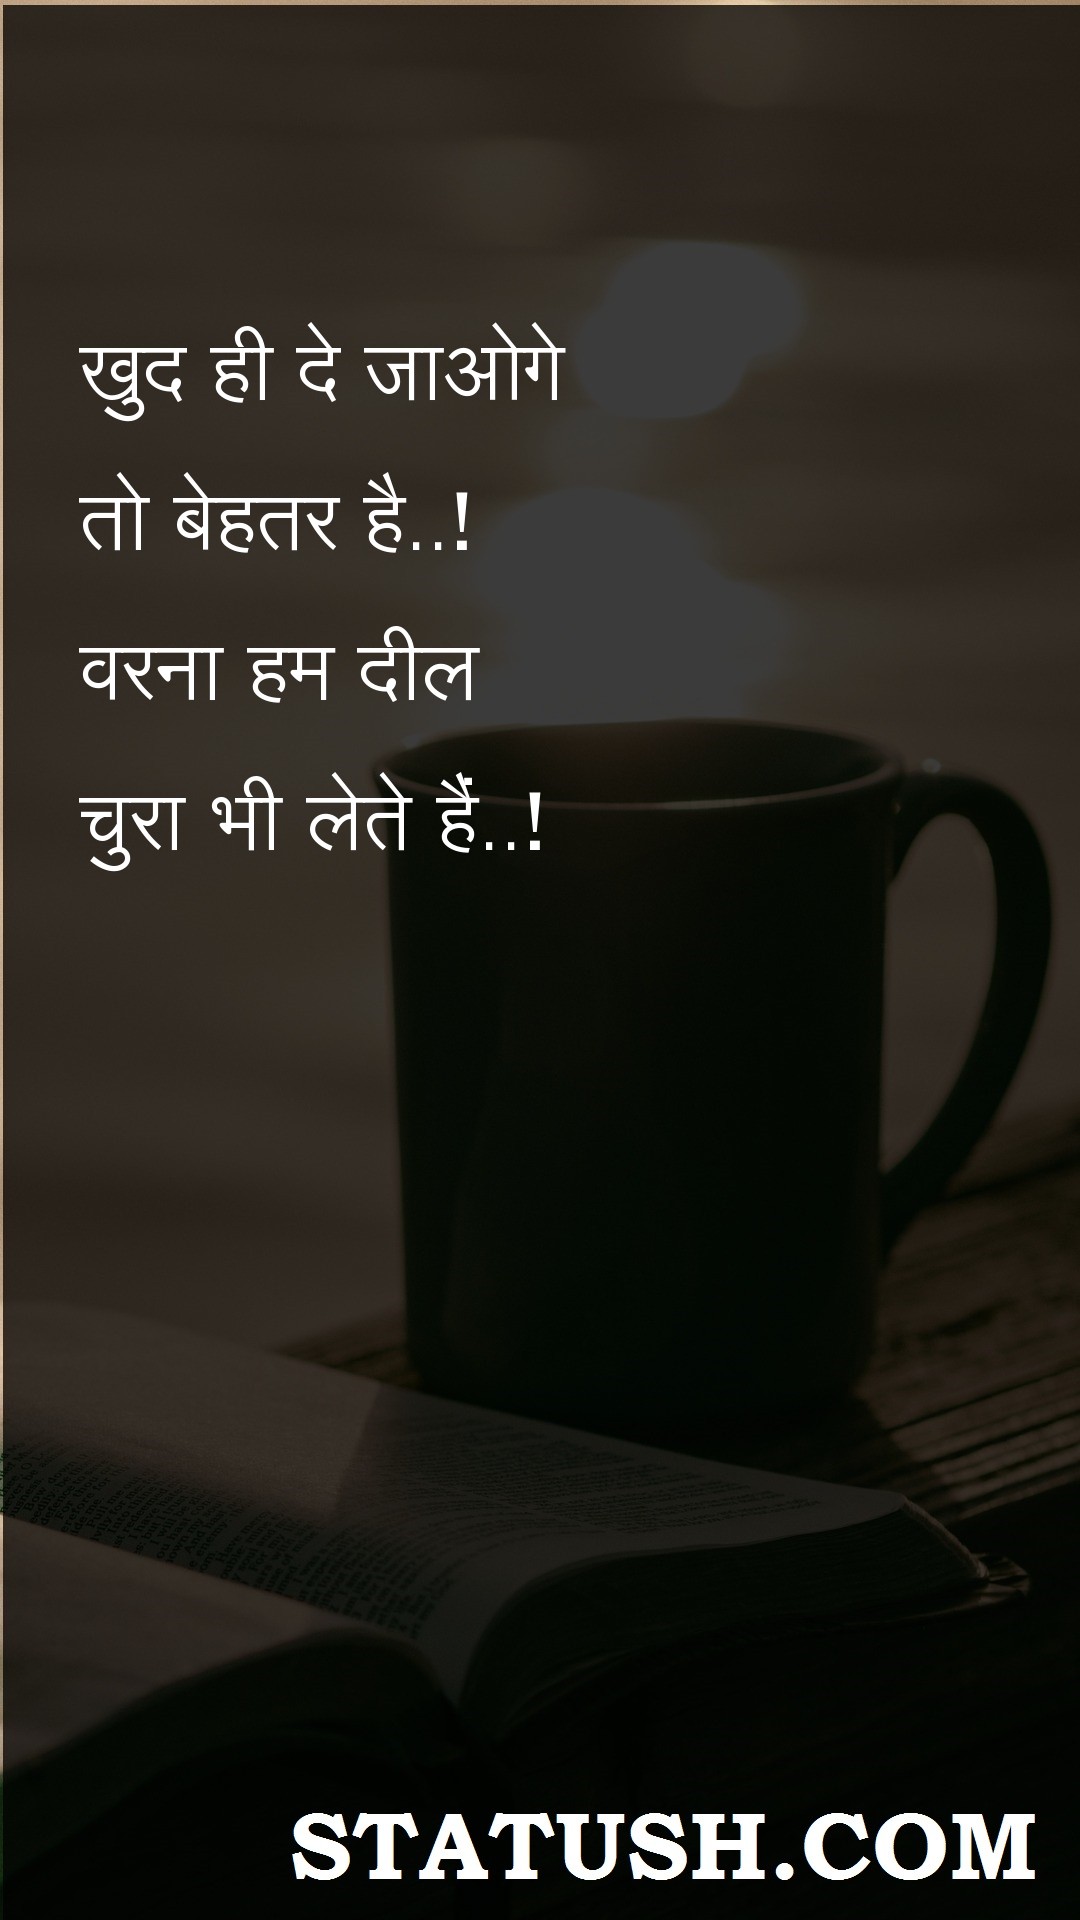 If you give yourself - Hindi Quotes at statush.com